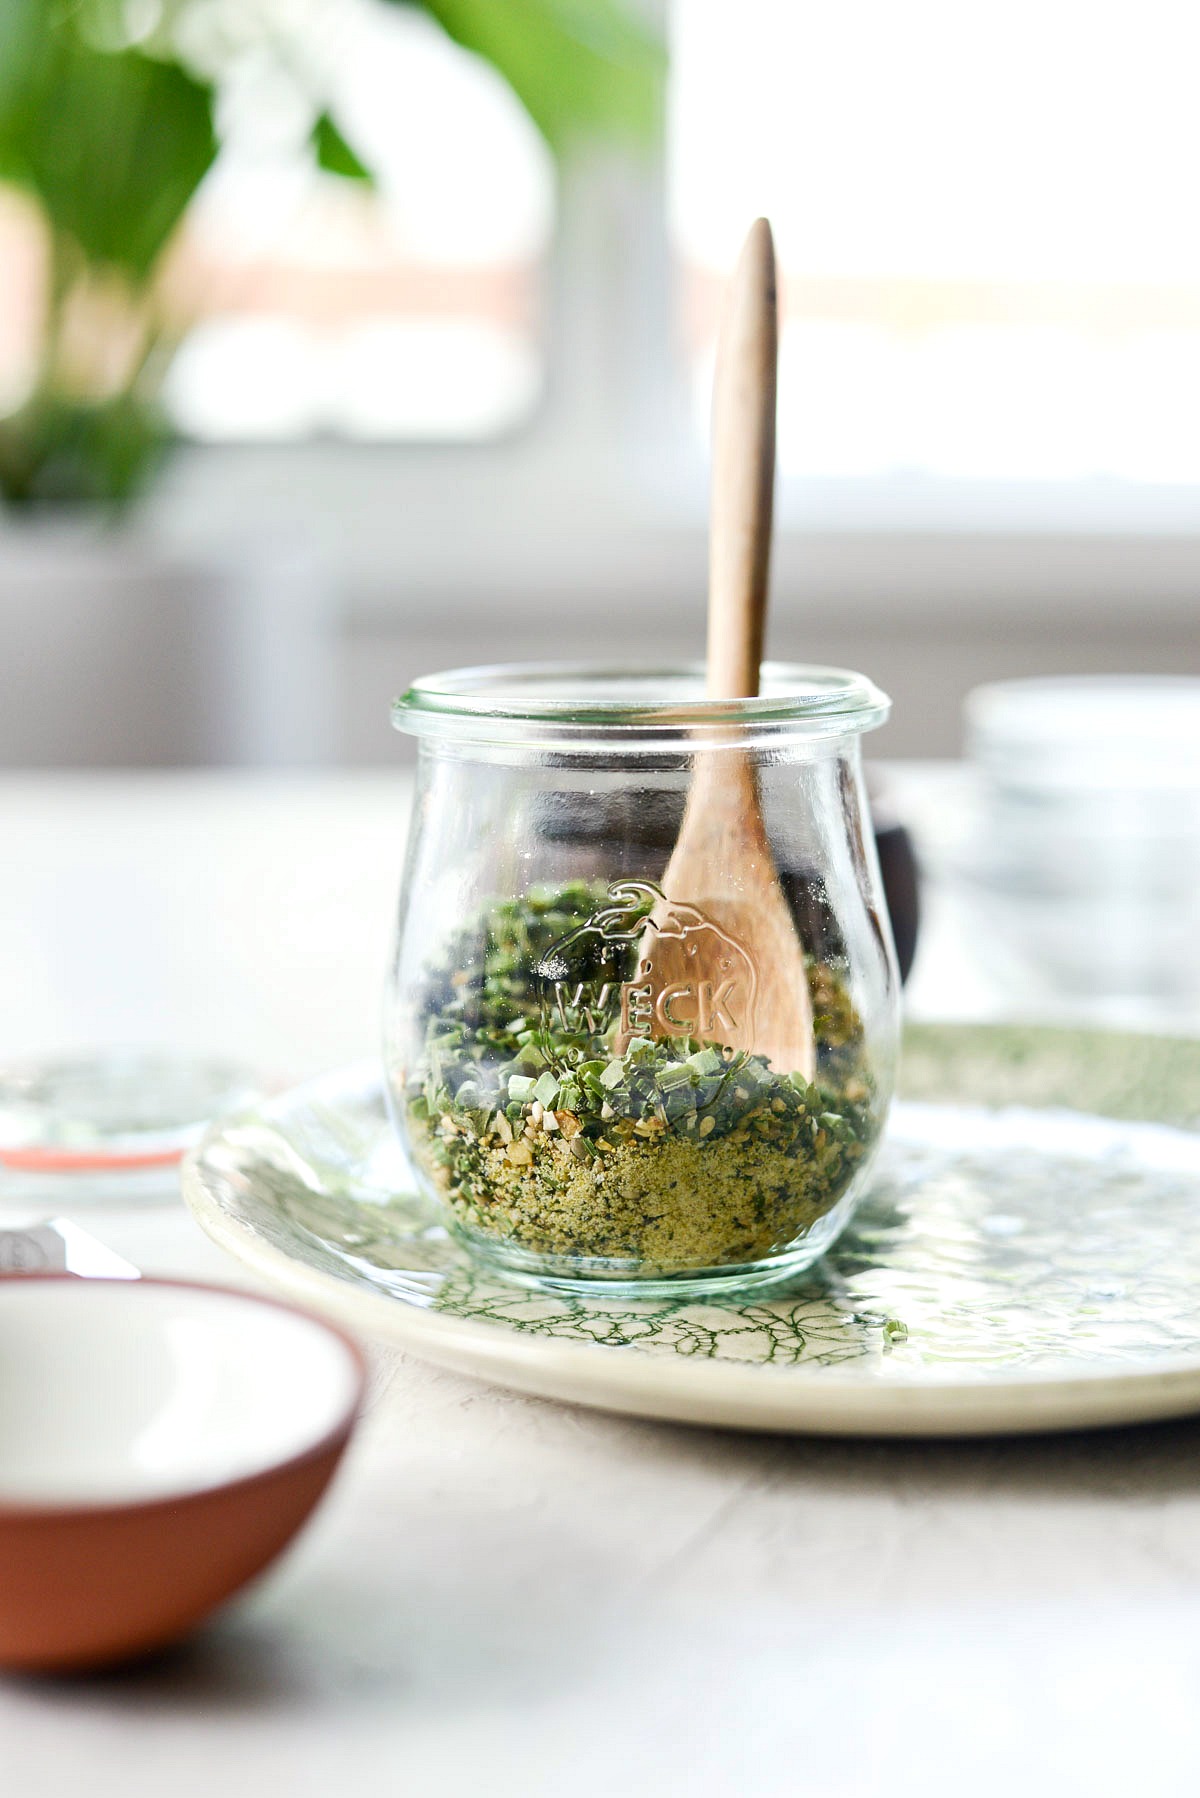 All-Purpose Garlic Herb Seasoning - Budget Bytes